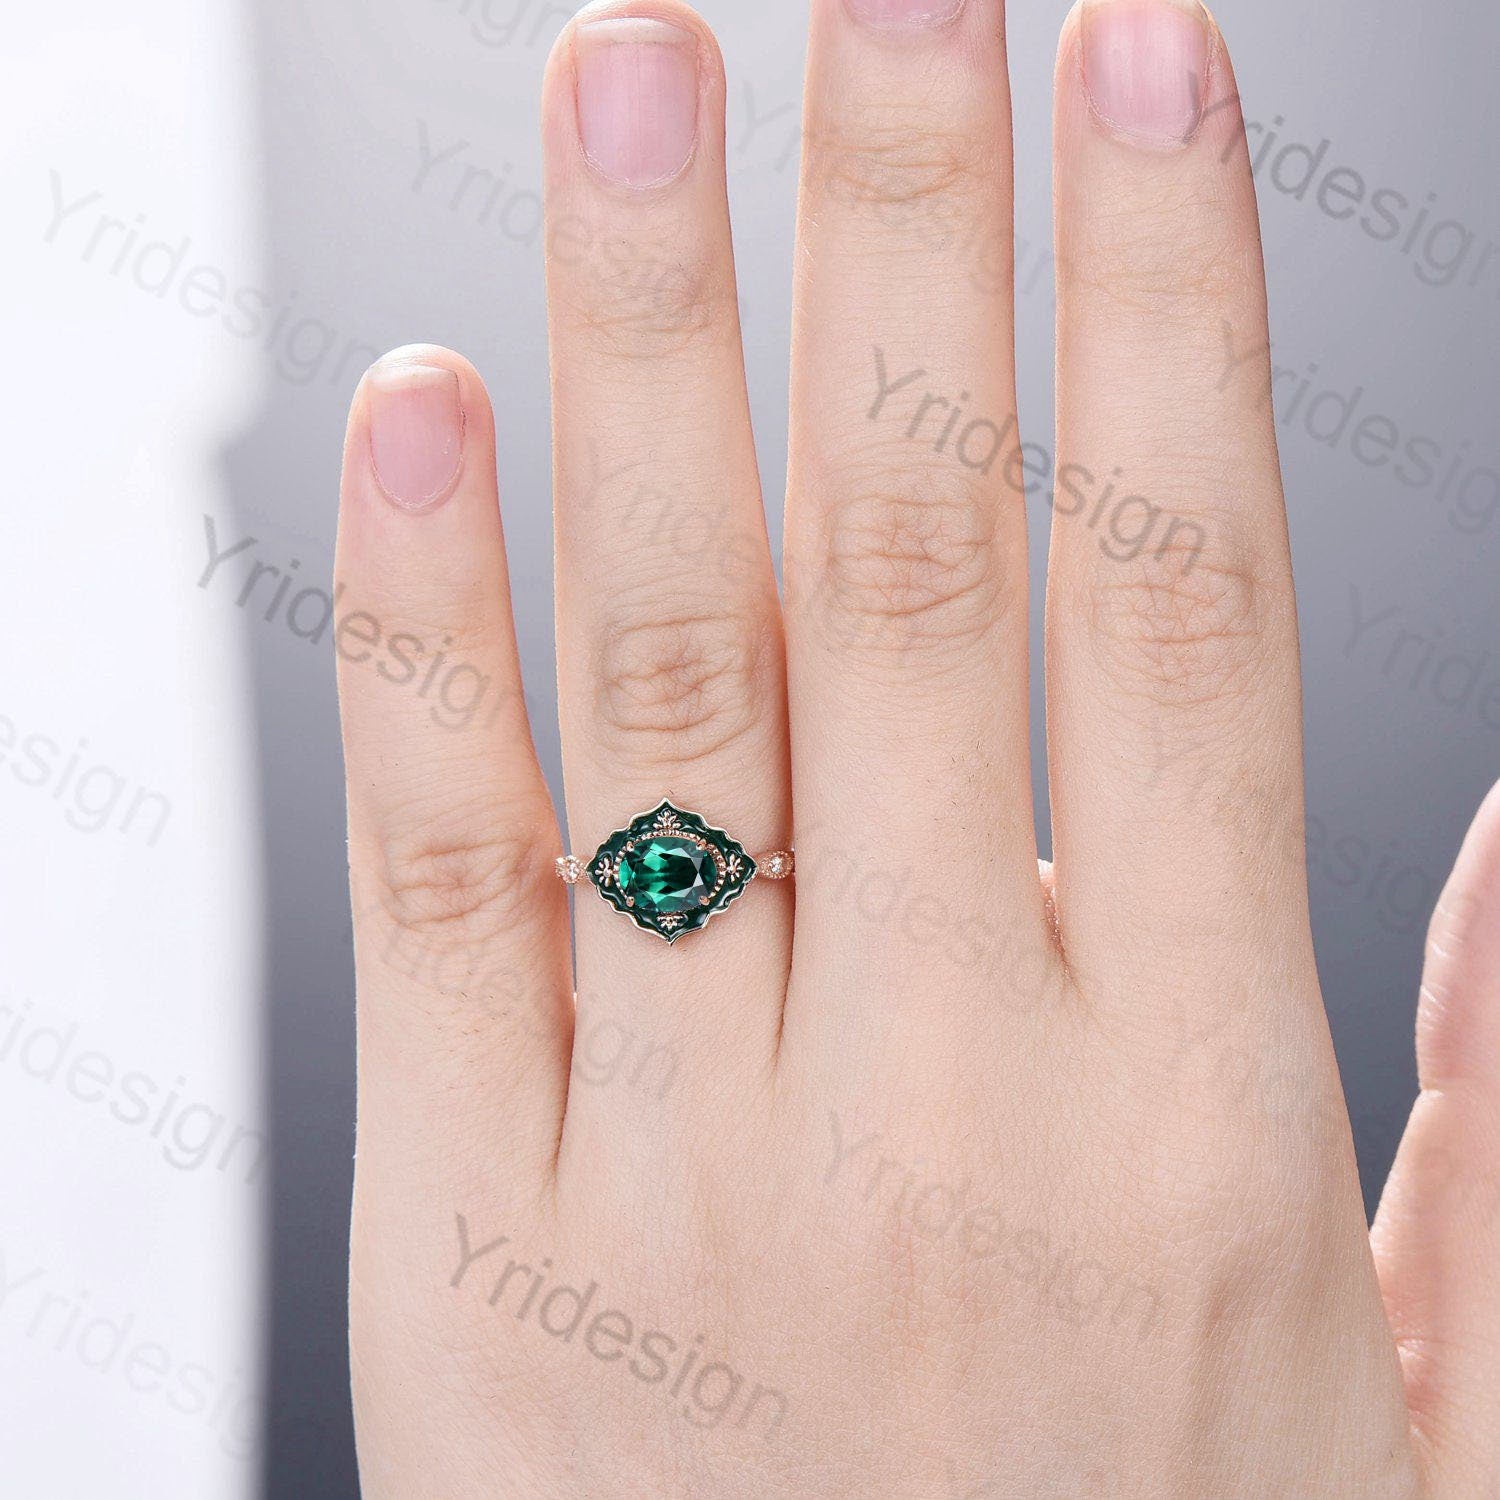 Green Stone With Diamond Antique Design Gold Plated Ring For Men - Style  A846 at Rs 550.00 | सोने का पानी चढ़ी हुई अंगूठी - Soni Fashion, Rajkot |  ID: 2851544569691